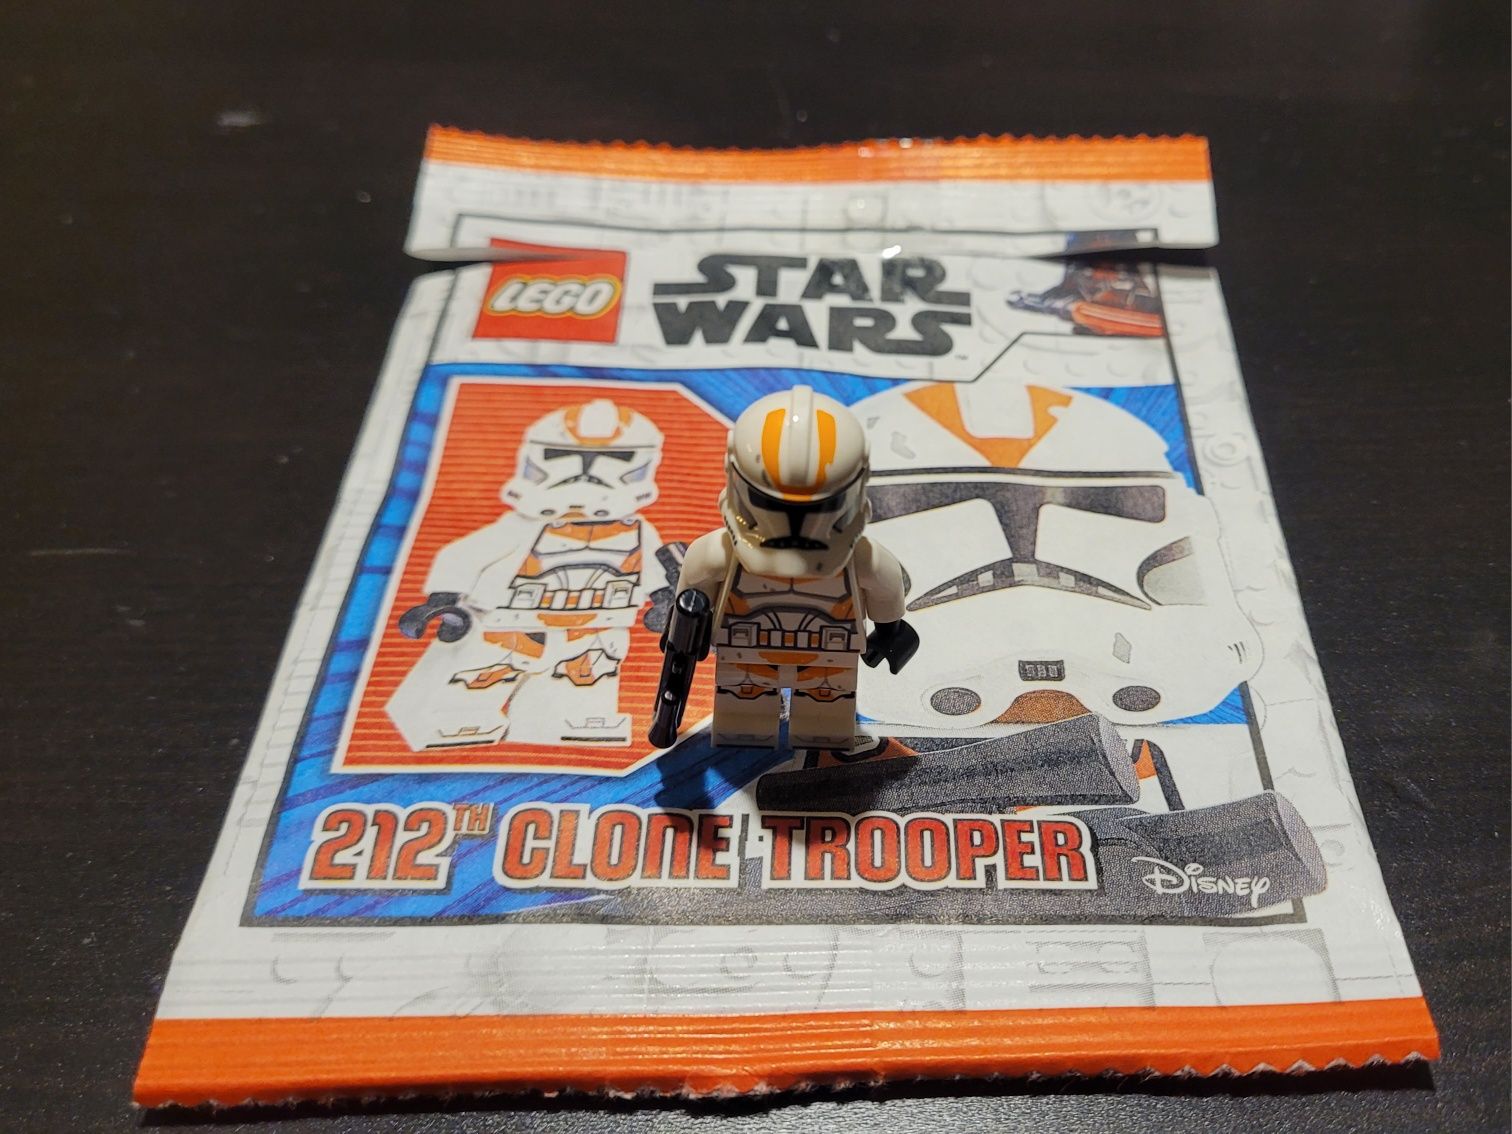 LEGO Star Wars figurka 212th Clone Trooper sw1235